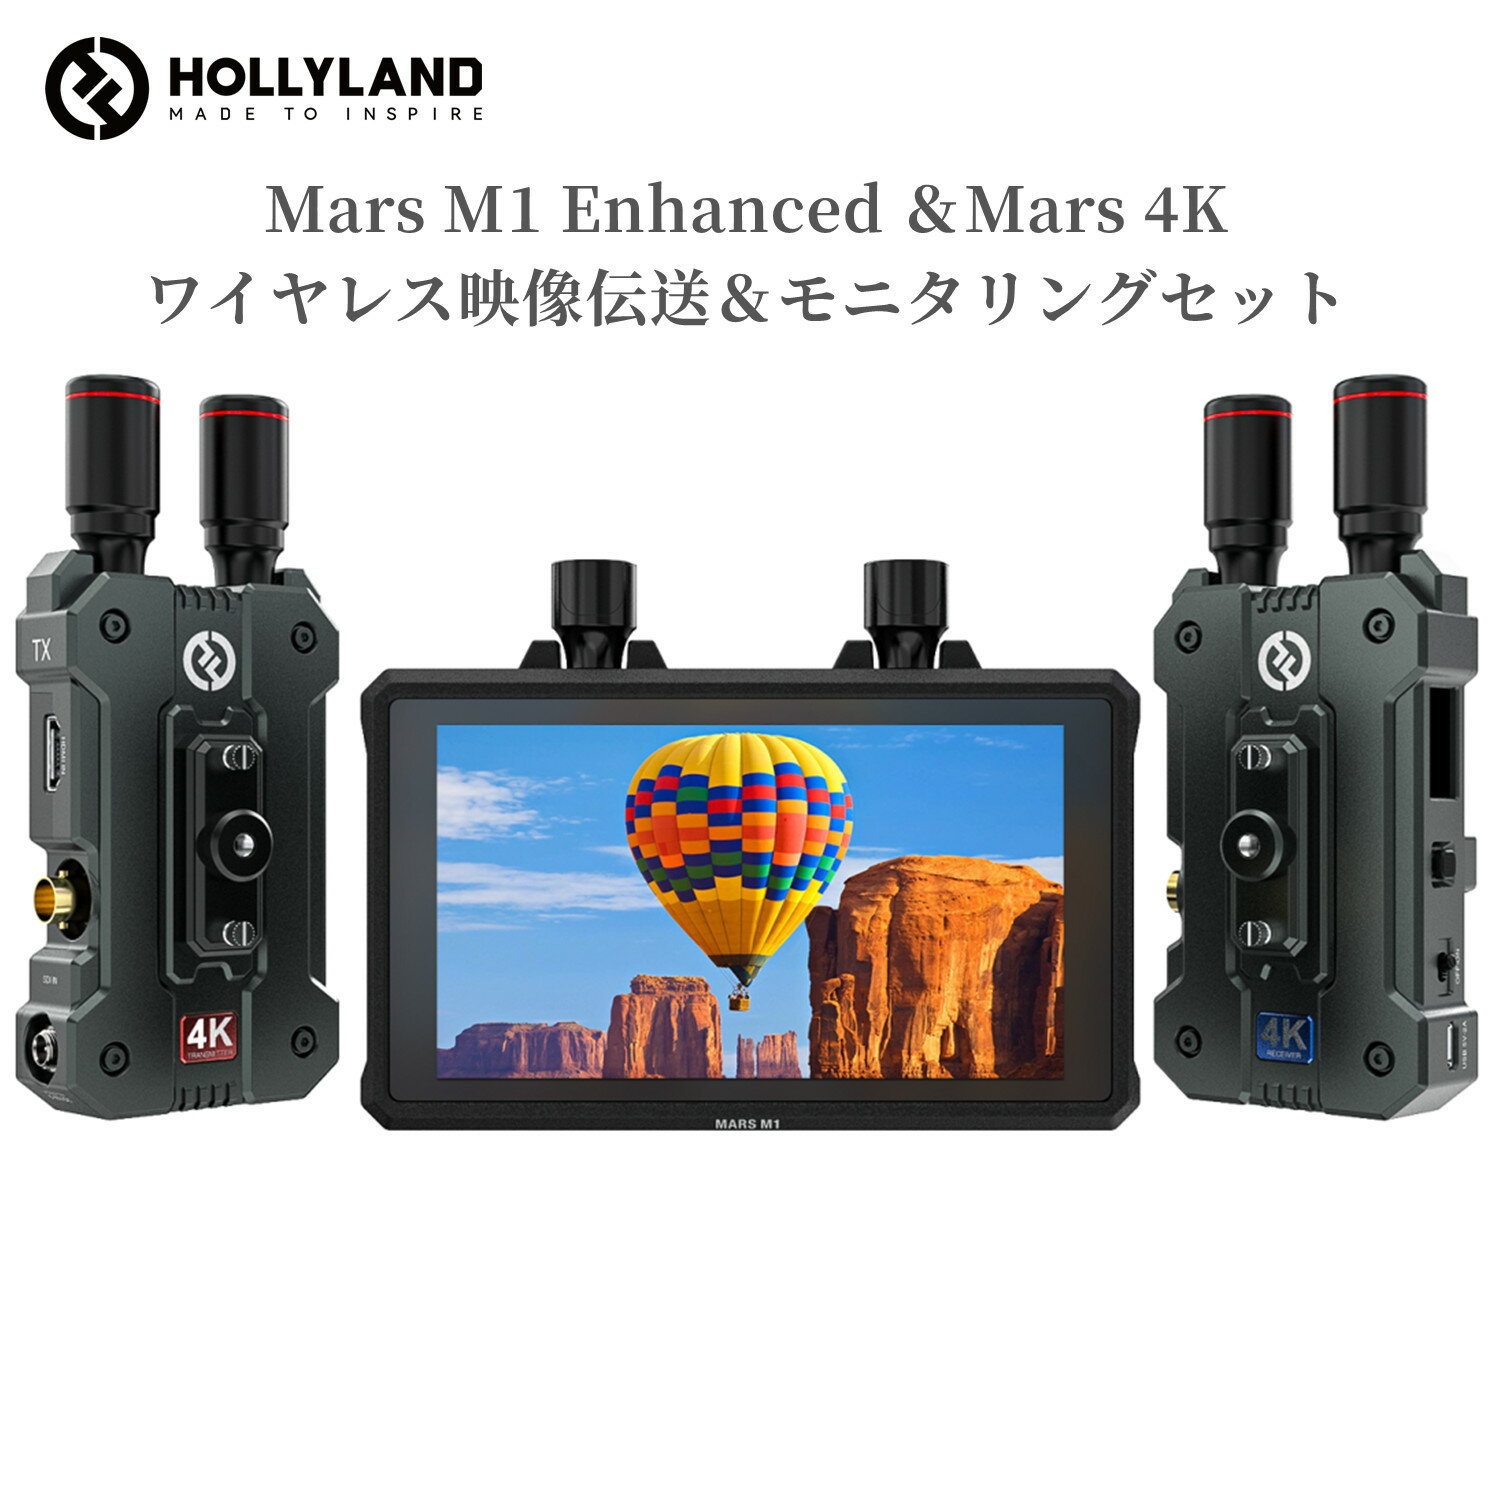 Hollyland ワイヤレス映像伝送＆モニタリングセット Mars M1 Enhanced カメラ用モニターとMars 4Kワイヤレス映像伝送装置セット 無線映像伝送システムとモニターが一体化 HDMI/SDI入出力 遠隔地から高品質な映像・音声を伝送 効率よく映像を監視して伝送する